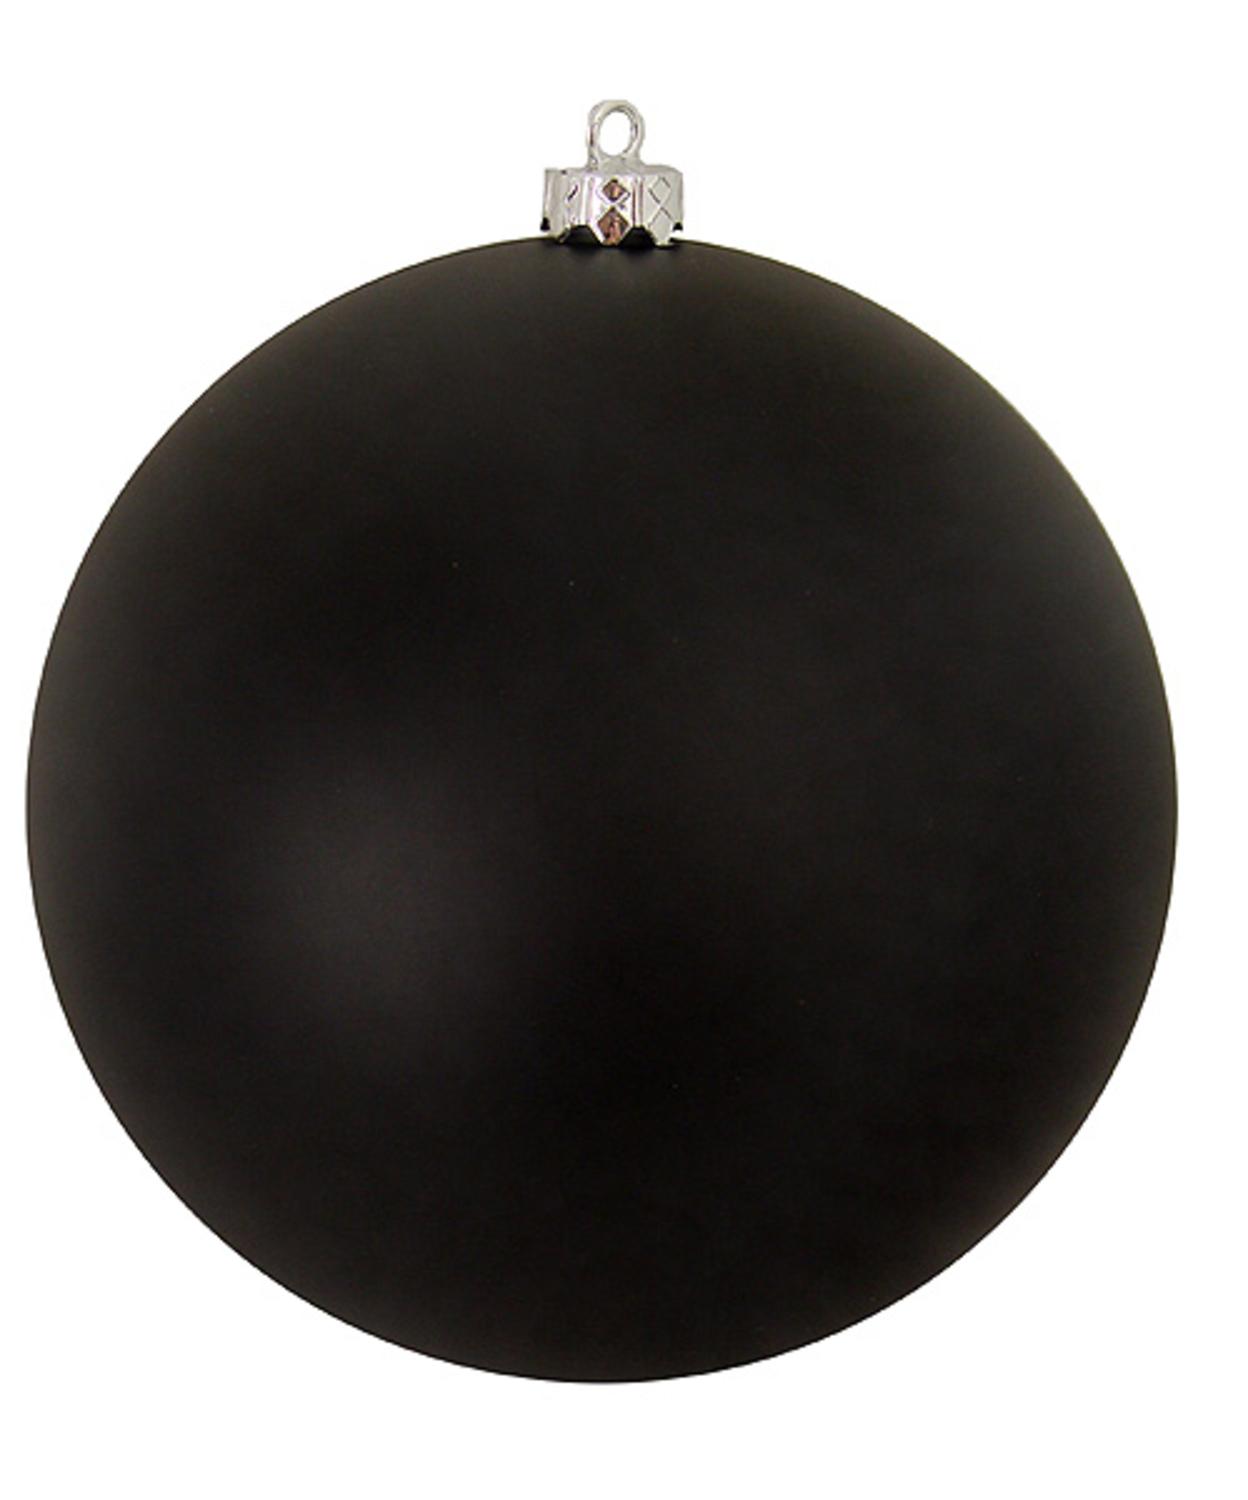 Matte Jet Black Commercial Shatterproof Christmas Ball Ornament 6" (150mm) - image 1 of 2